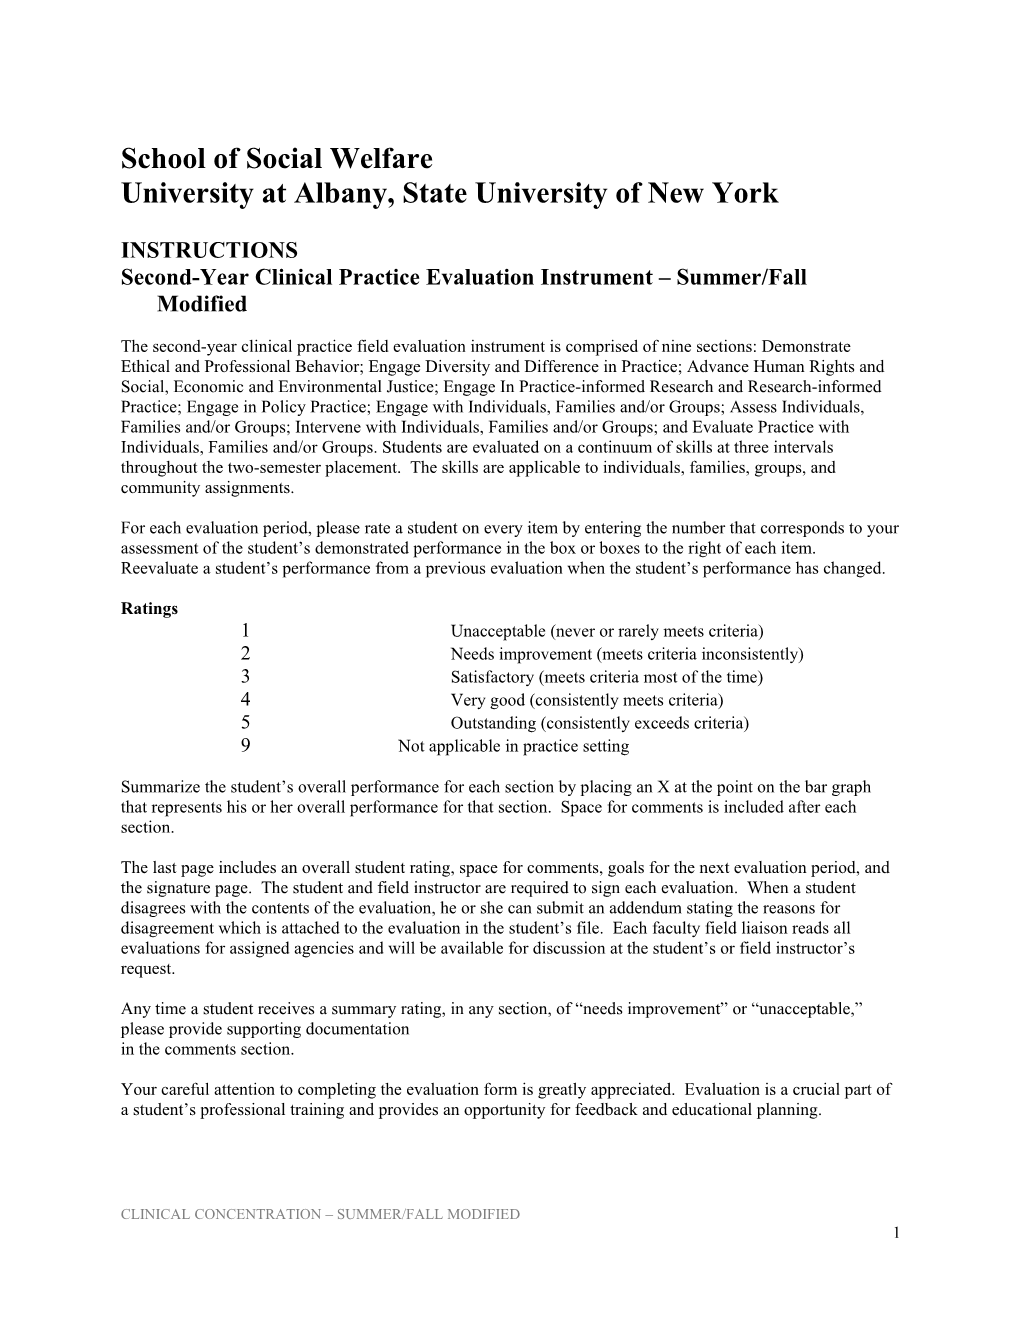 University at Albany, State University of New York s2